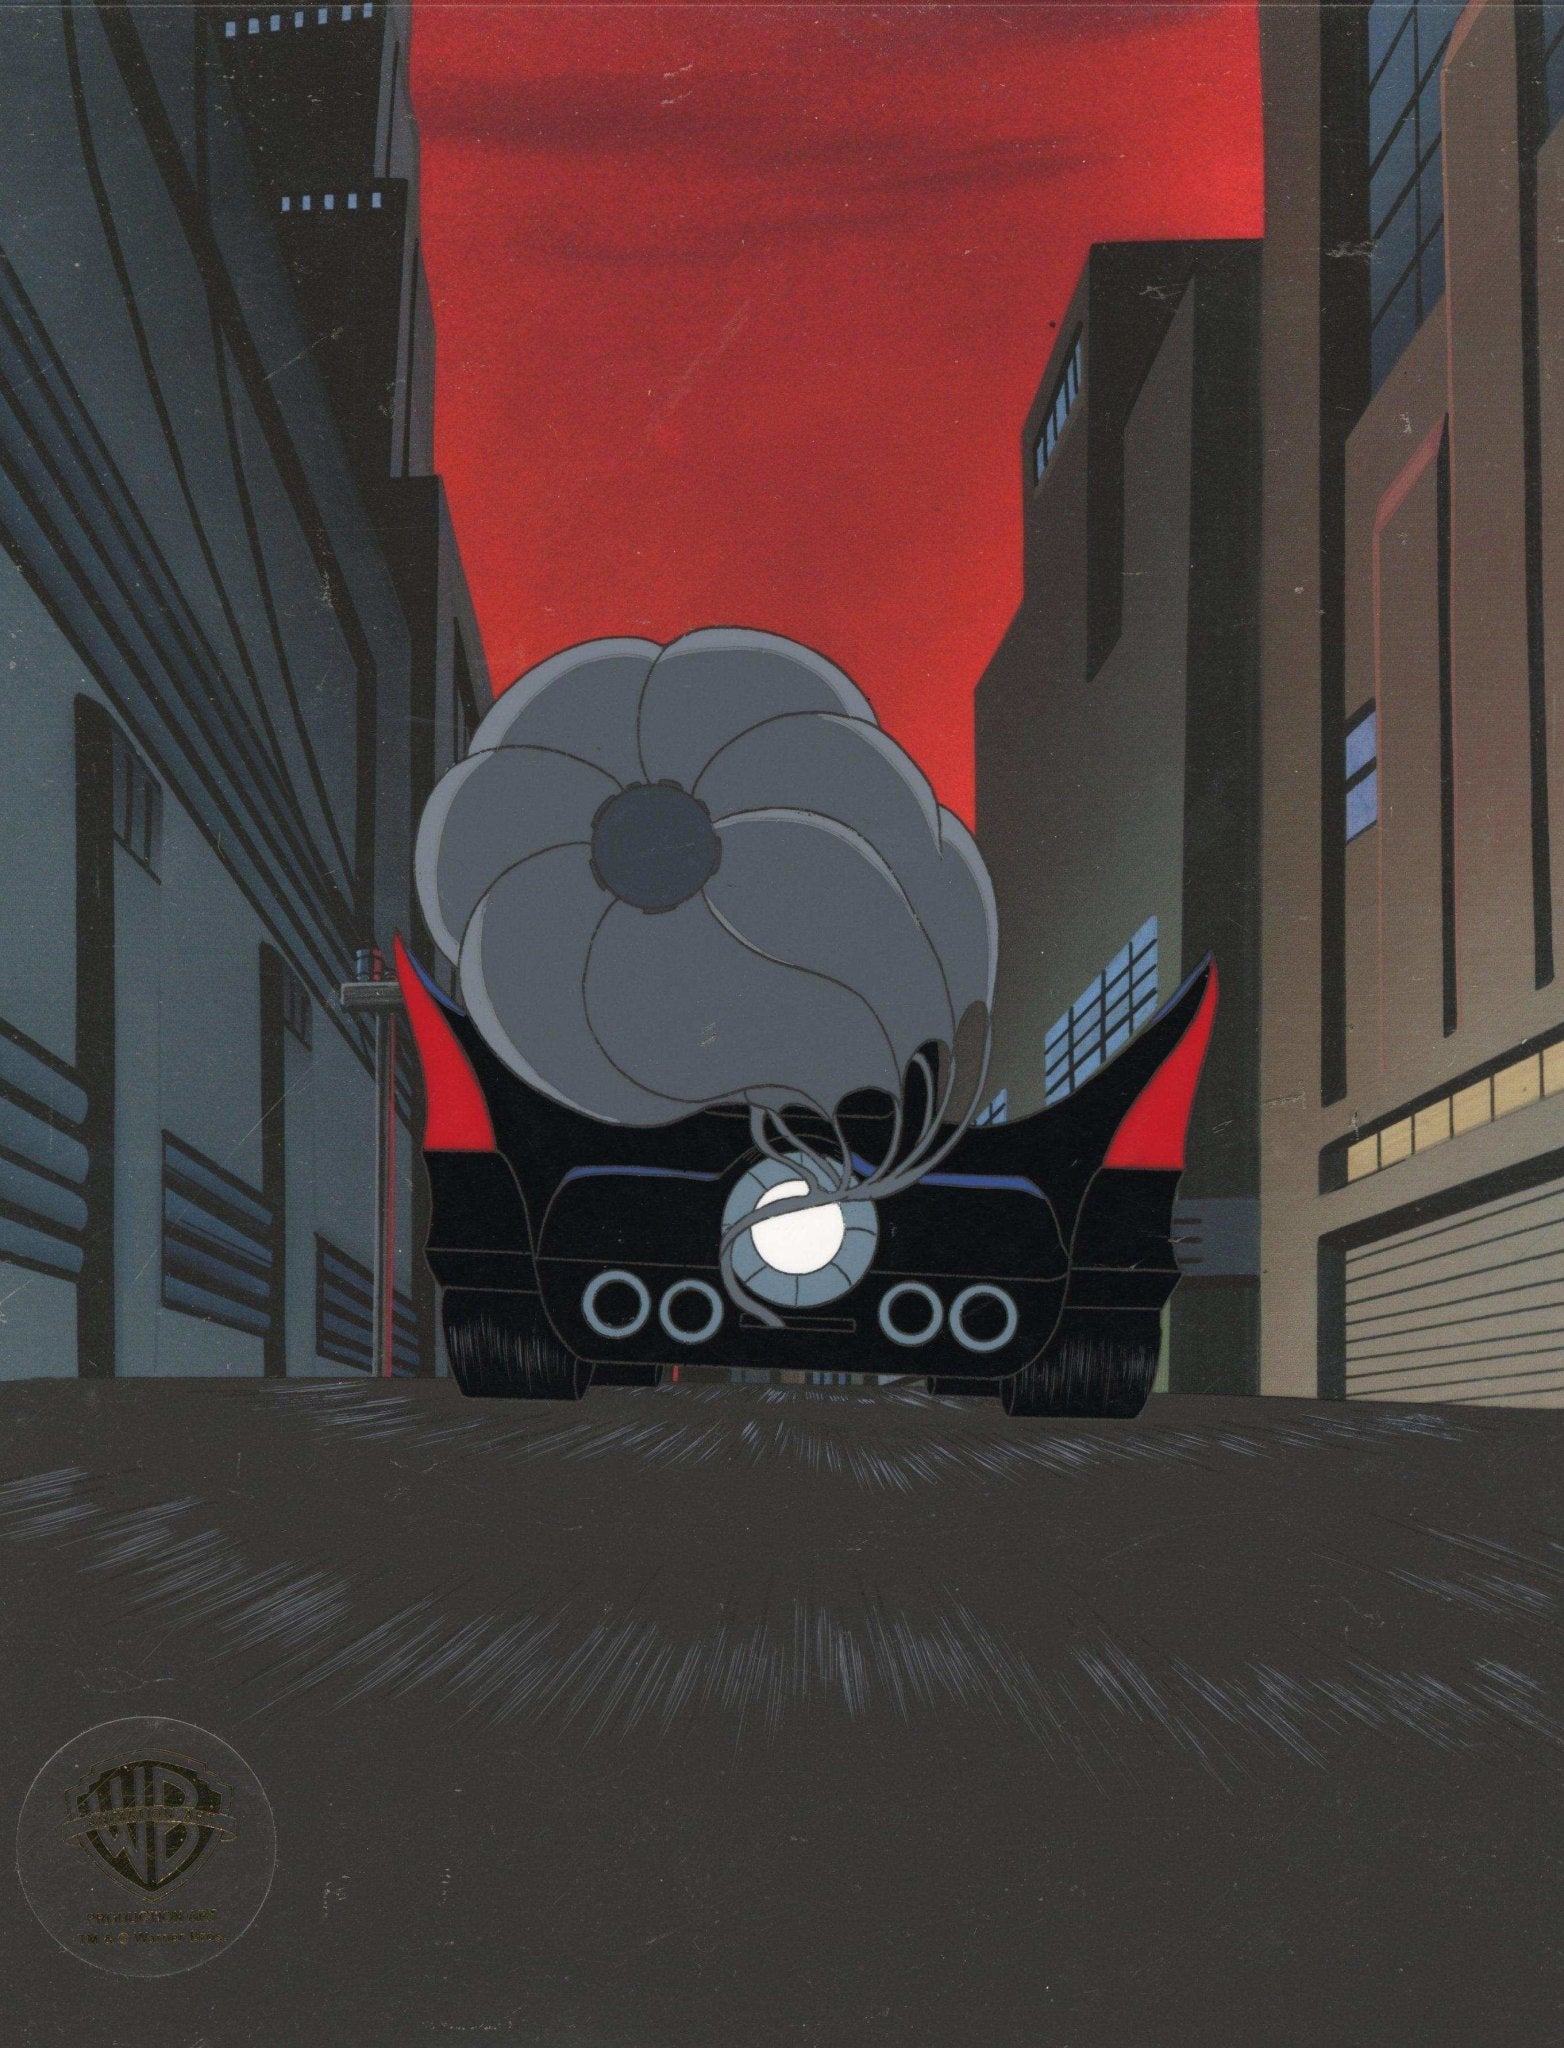 The New Batman Adventures Original Production Cel: Batmobile and